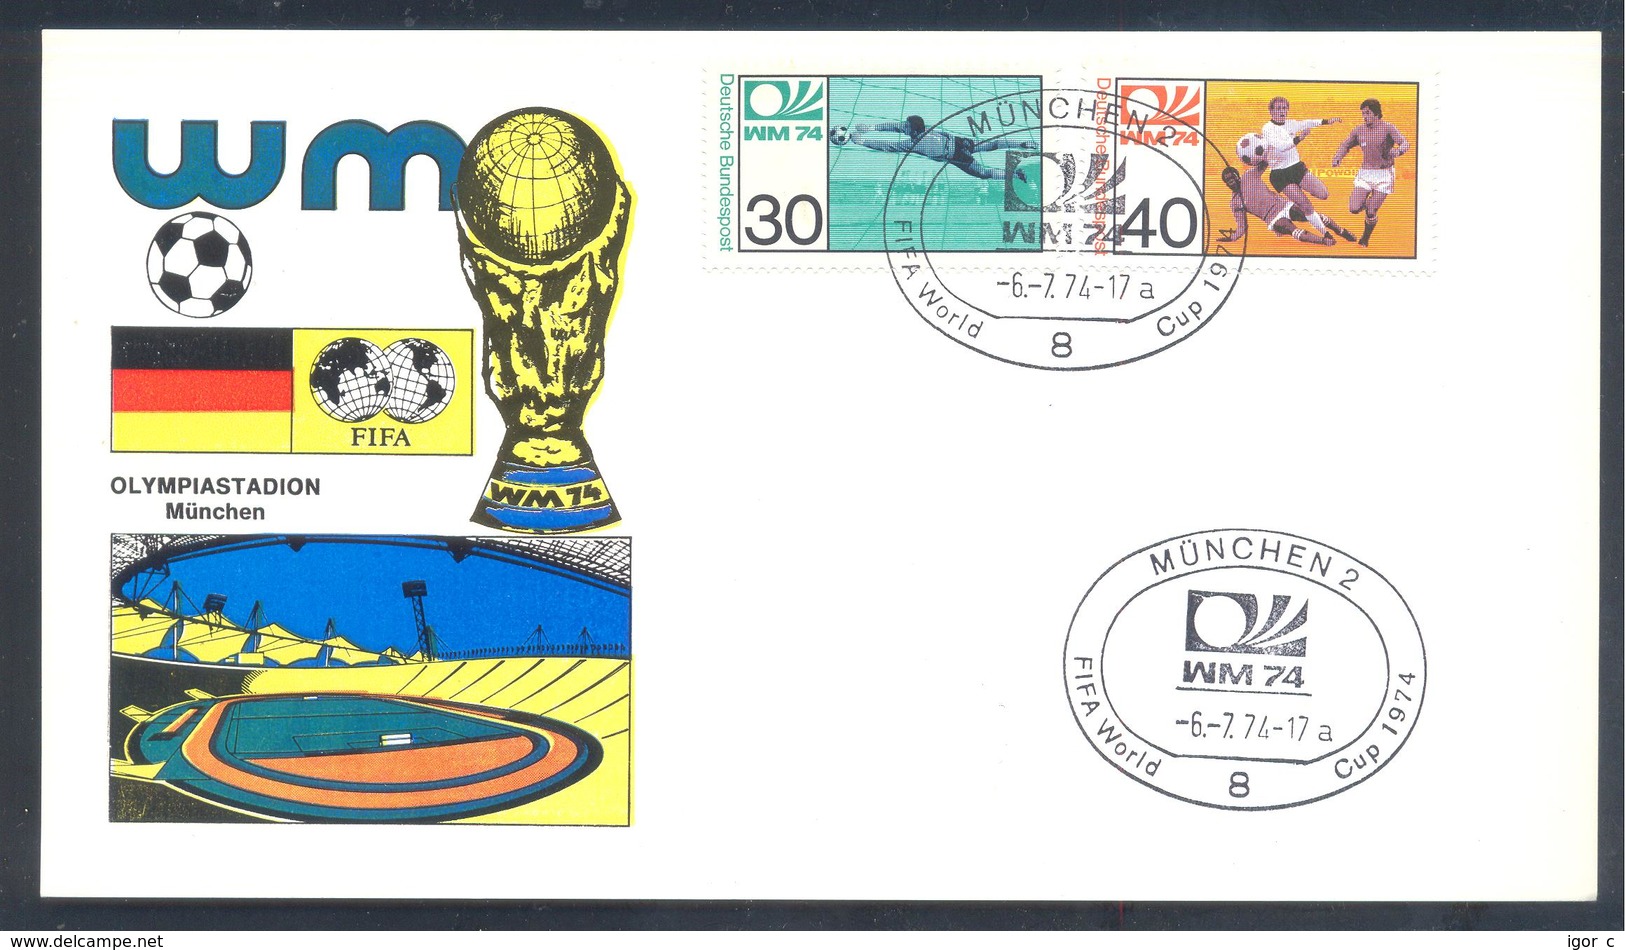 Germany 1974 Card: Football Fussball Soccer Calcio: FIFA World Cup; München Cancellation; Olympistadion - 1974 – Westdeutschland